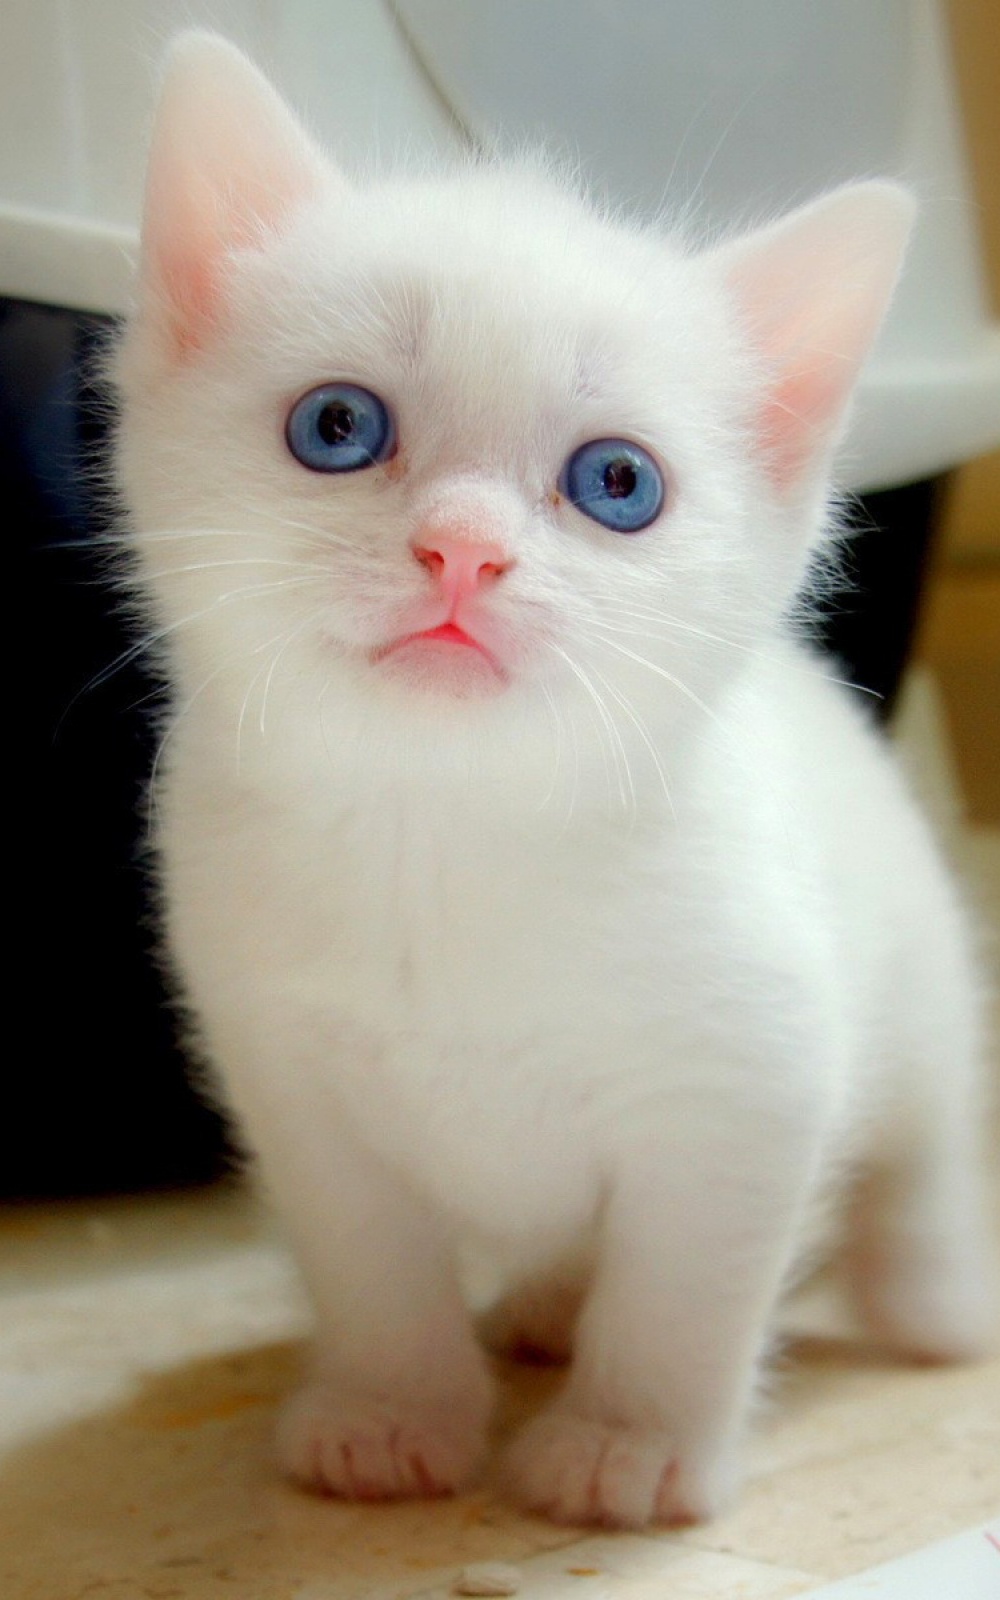 Big-Blue-Eyes-White-Kitten-iPhone-6-Plus-HD-Wallpaper.